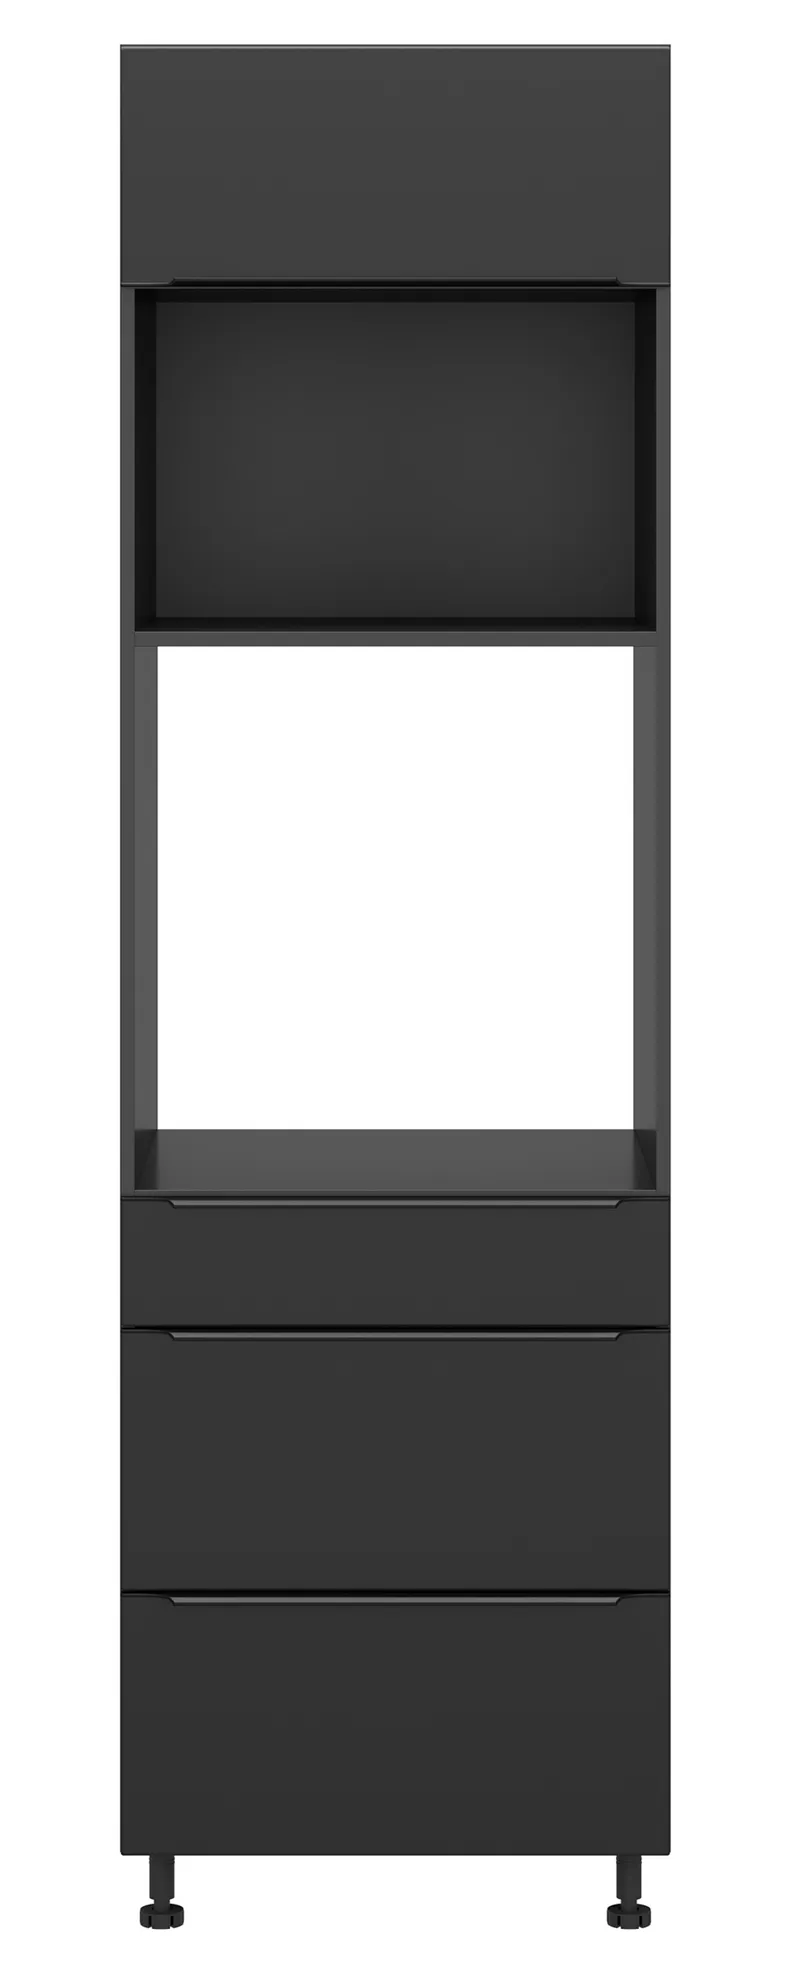 BRW Кухонный шкаф для духовки Sole L6 60 см с ящиками черный матовый, черный/черный матовый FM_DPS_60/207_2SMB/SMB/O-CA/CAM фото №1